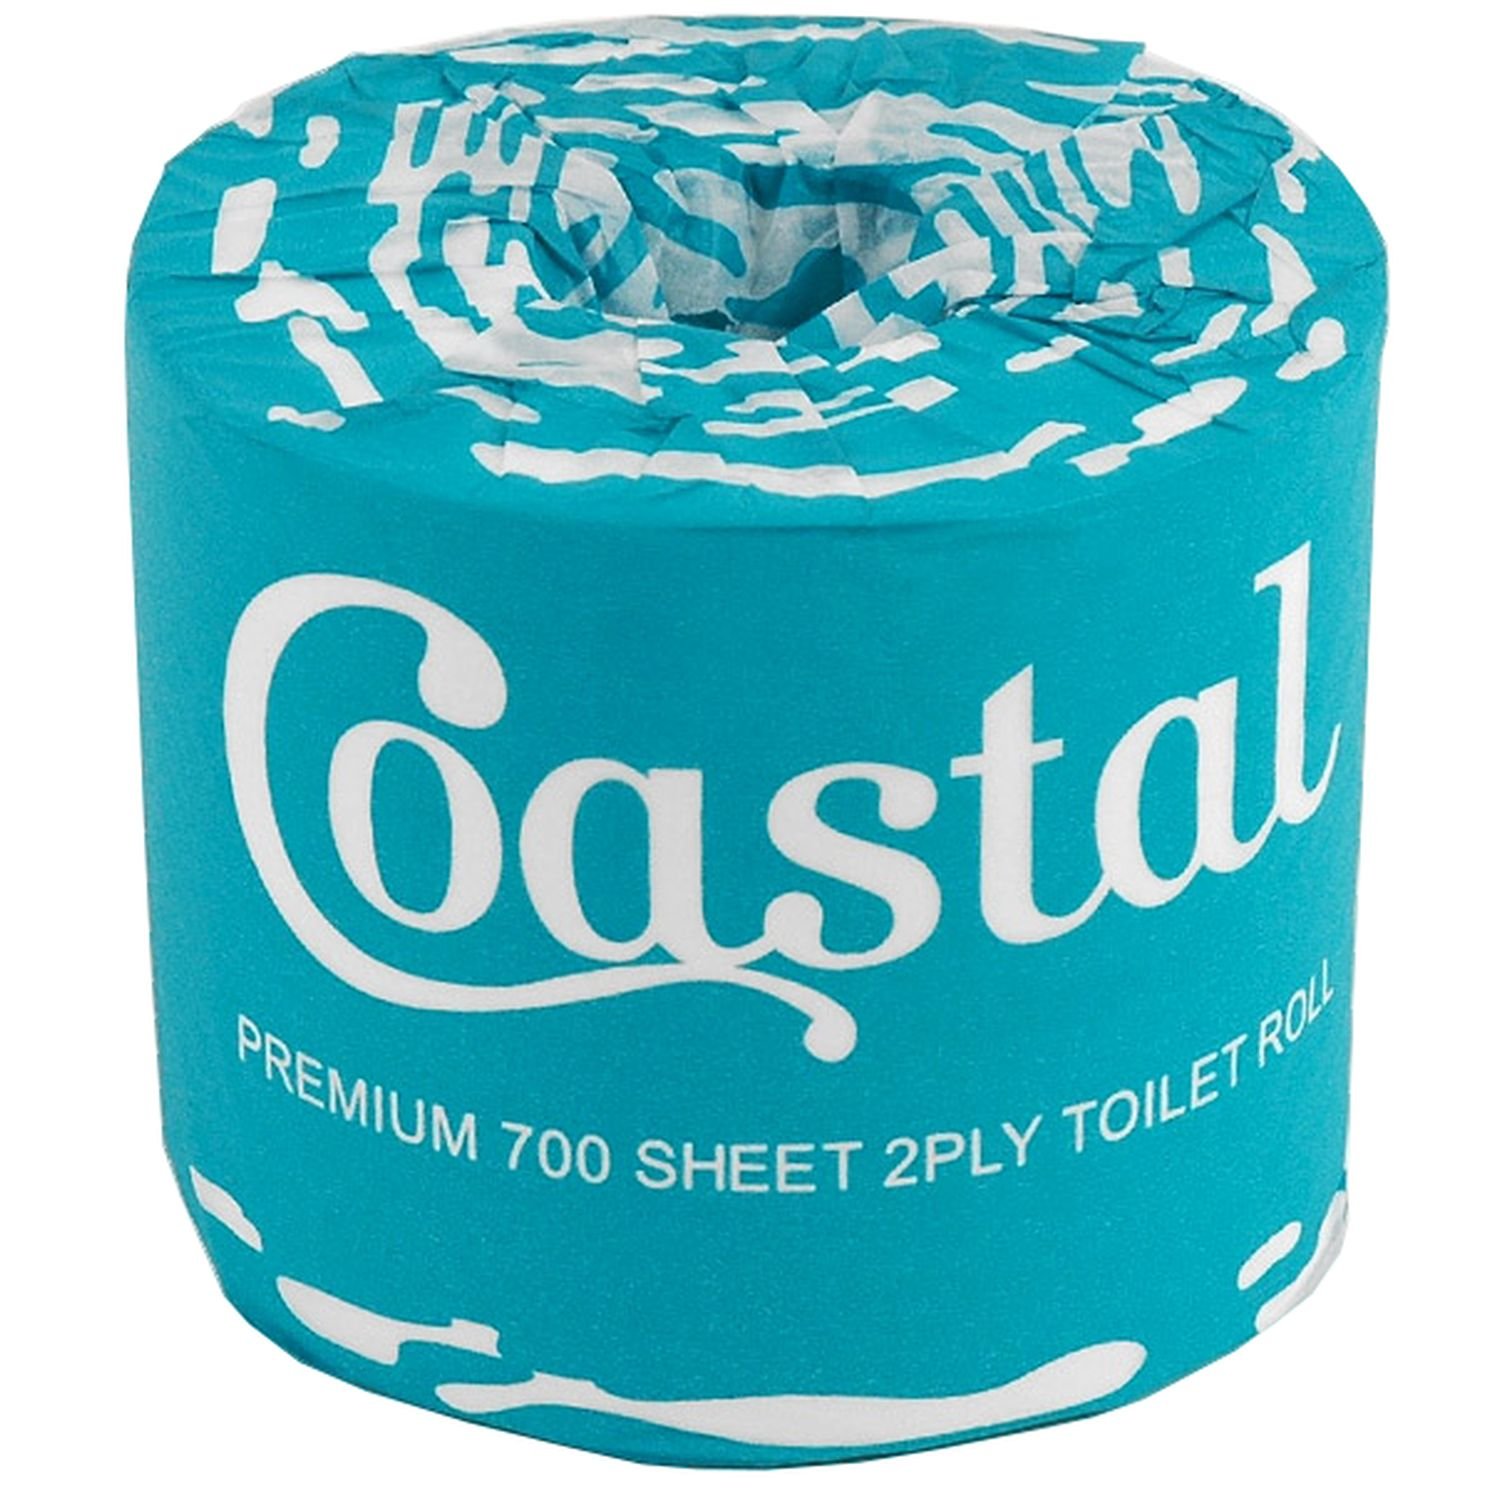 Coastal 700 Sheet Toilet Rolls 2 Ply  x 48 Ctn